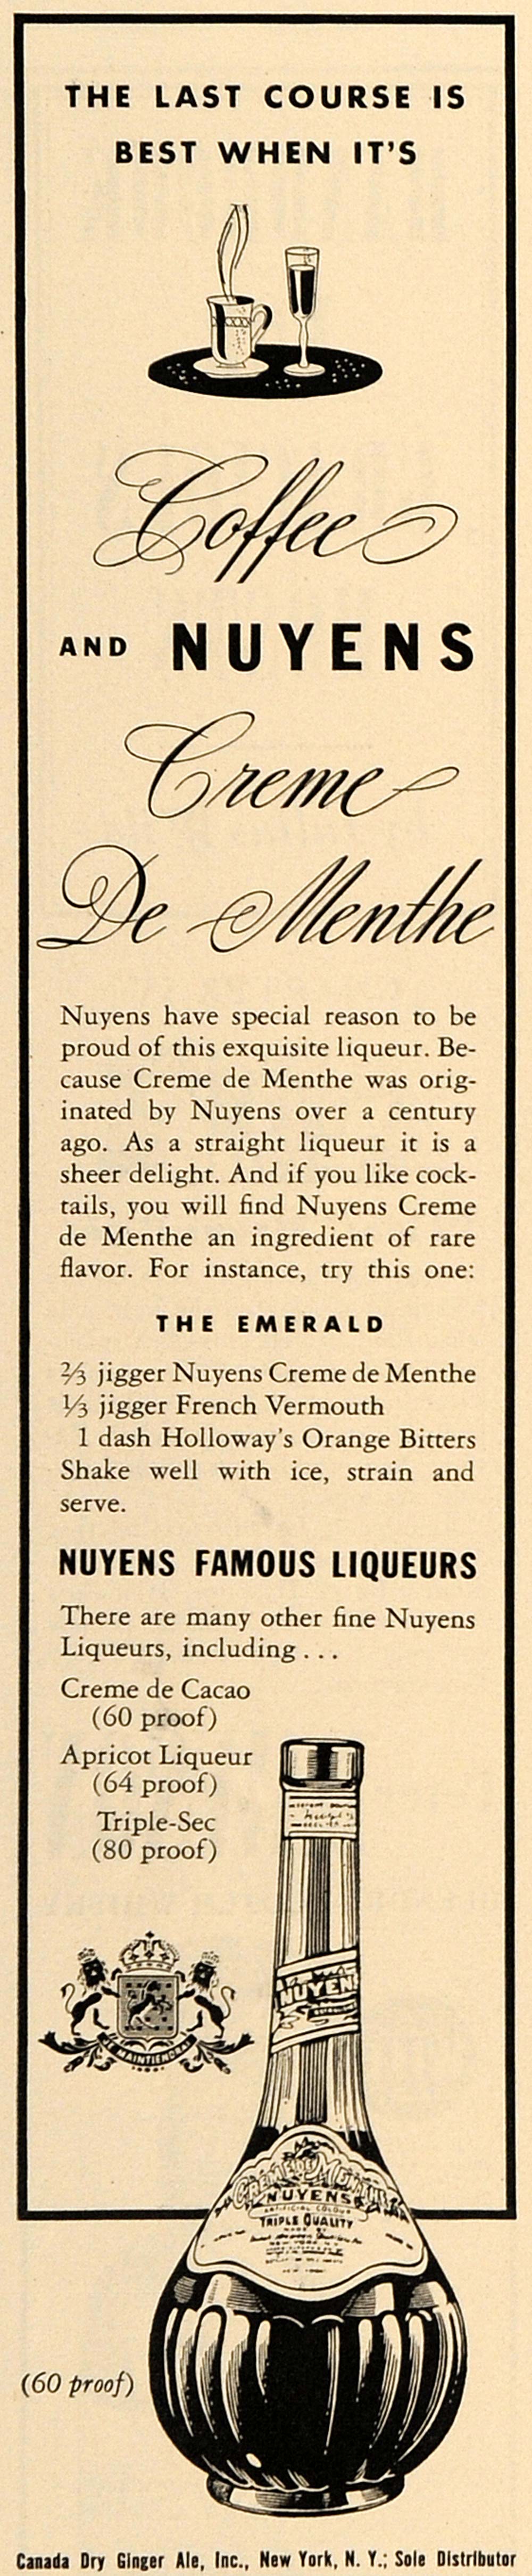 1938 Ad Canada Dry Ginger Ale Nuyens Liqueur Alcohol - ORIGINAL ADVERTISING ESQ1